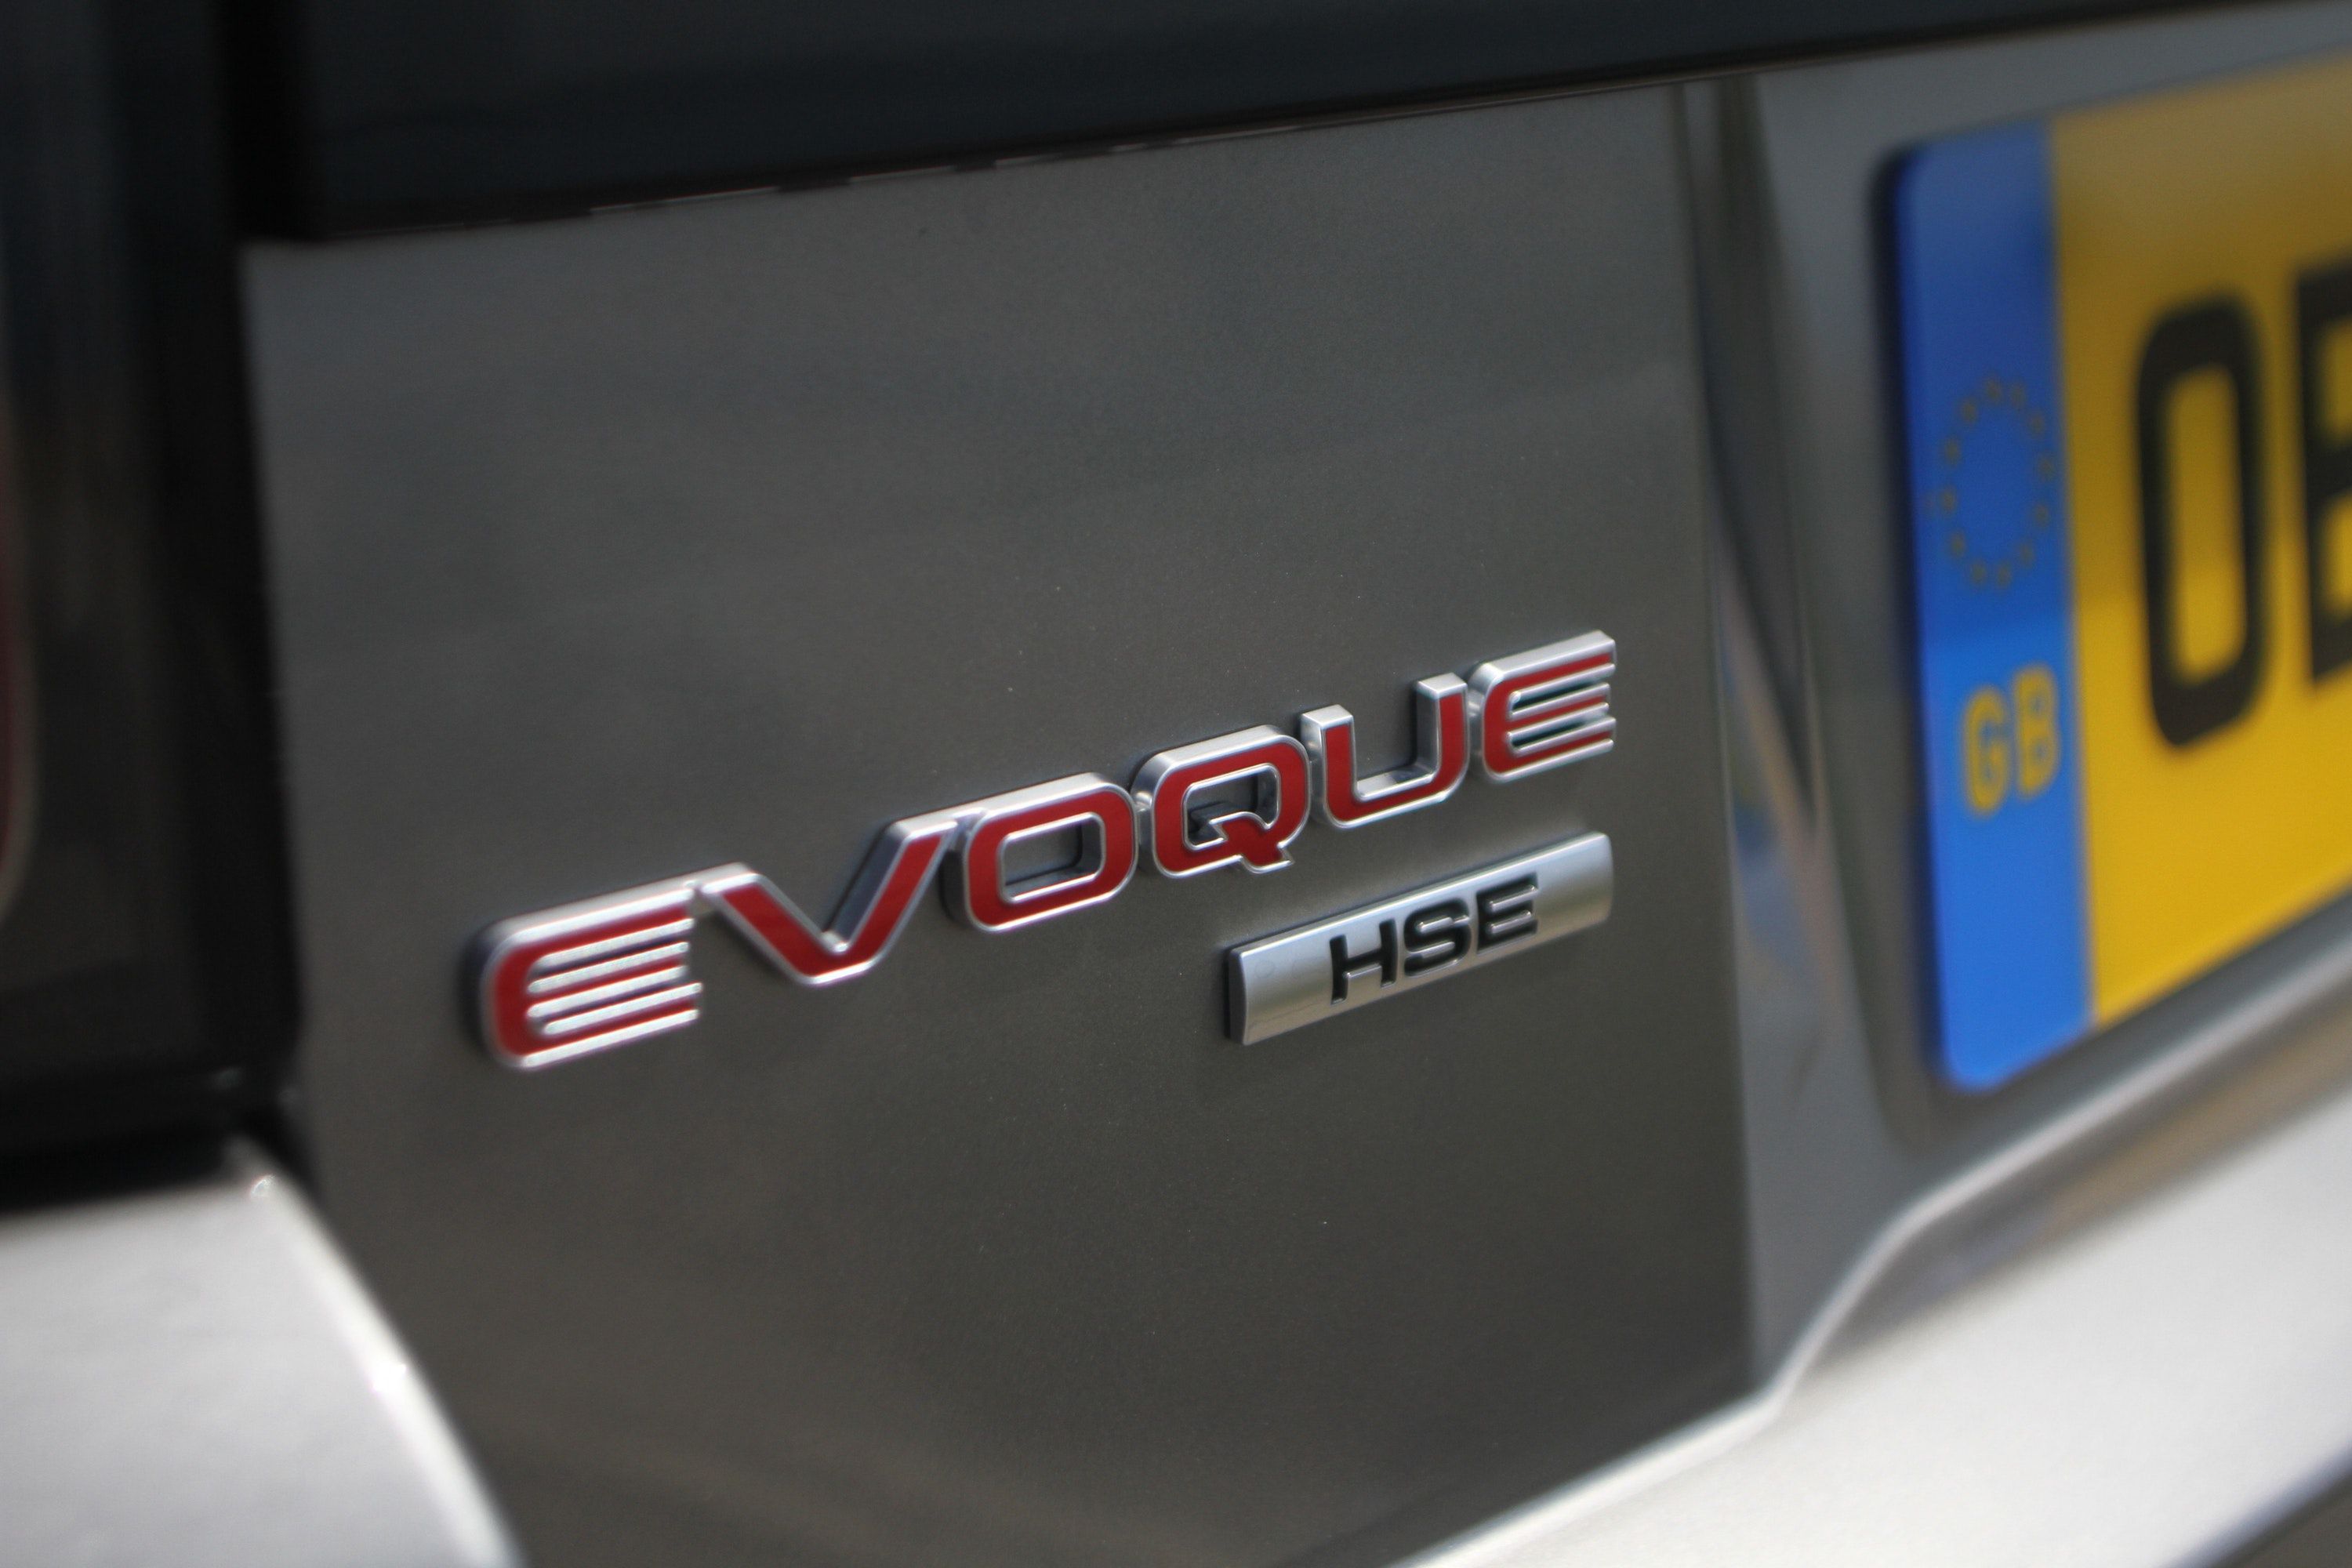 Land Rover Evoque HSE badge close up